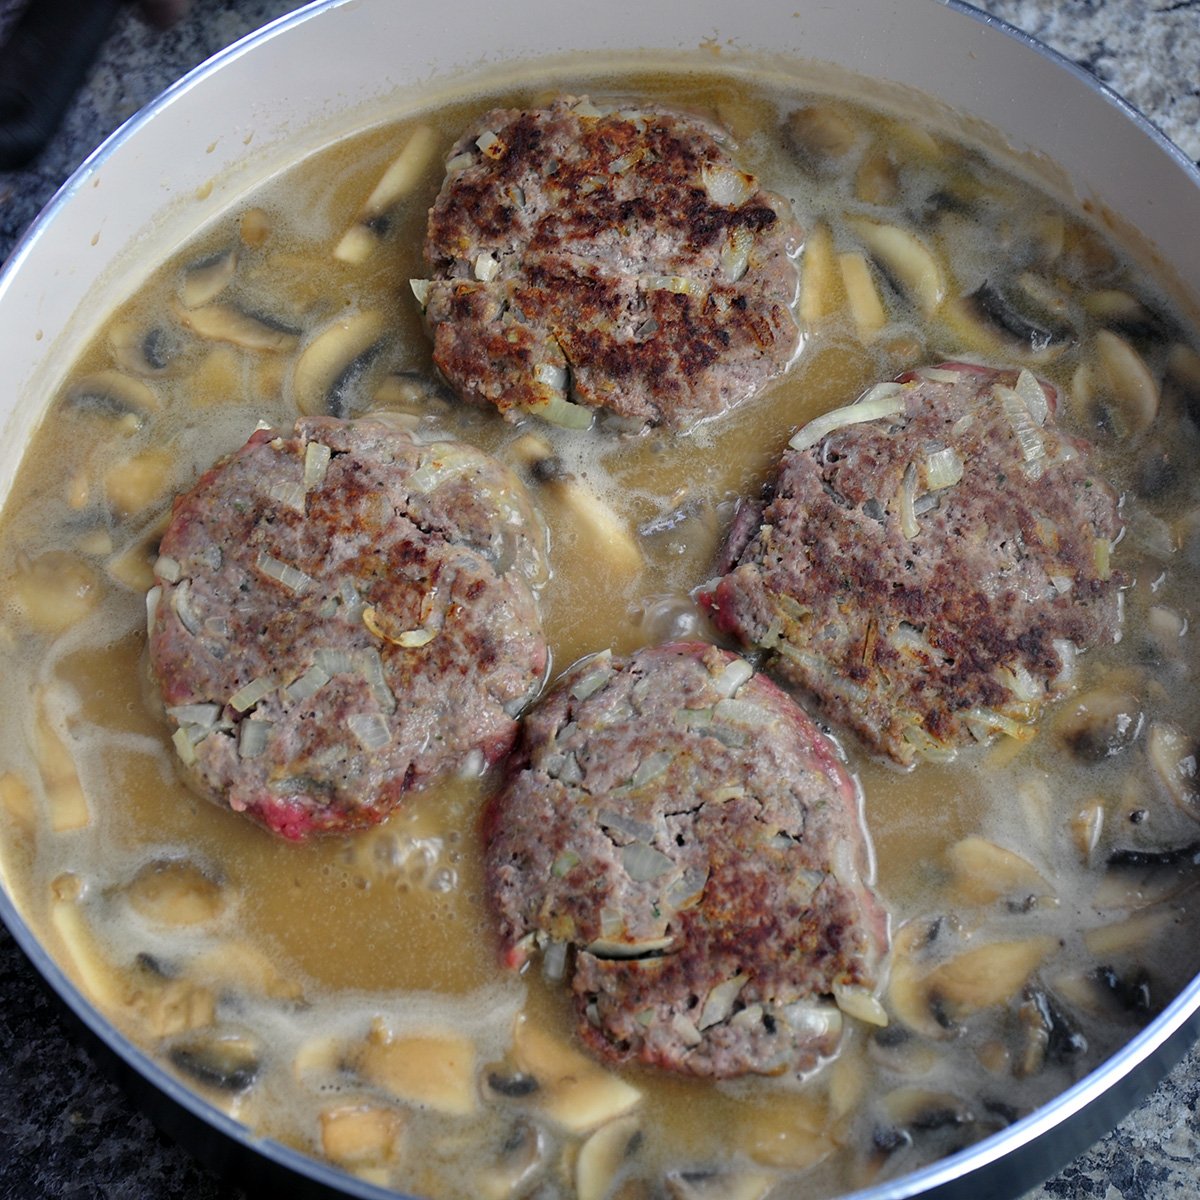 Four steak patties simmering in a saute pan.